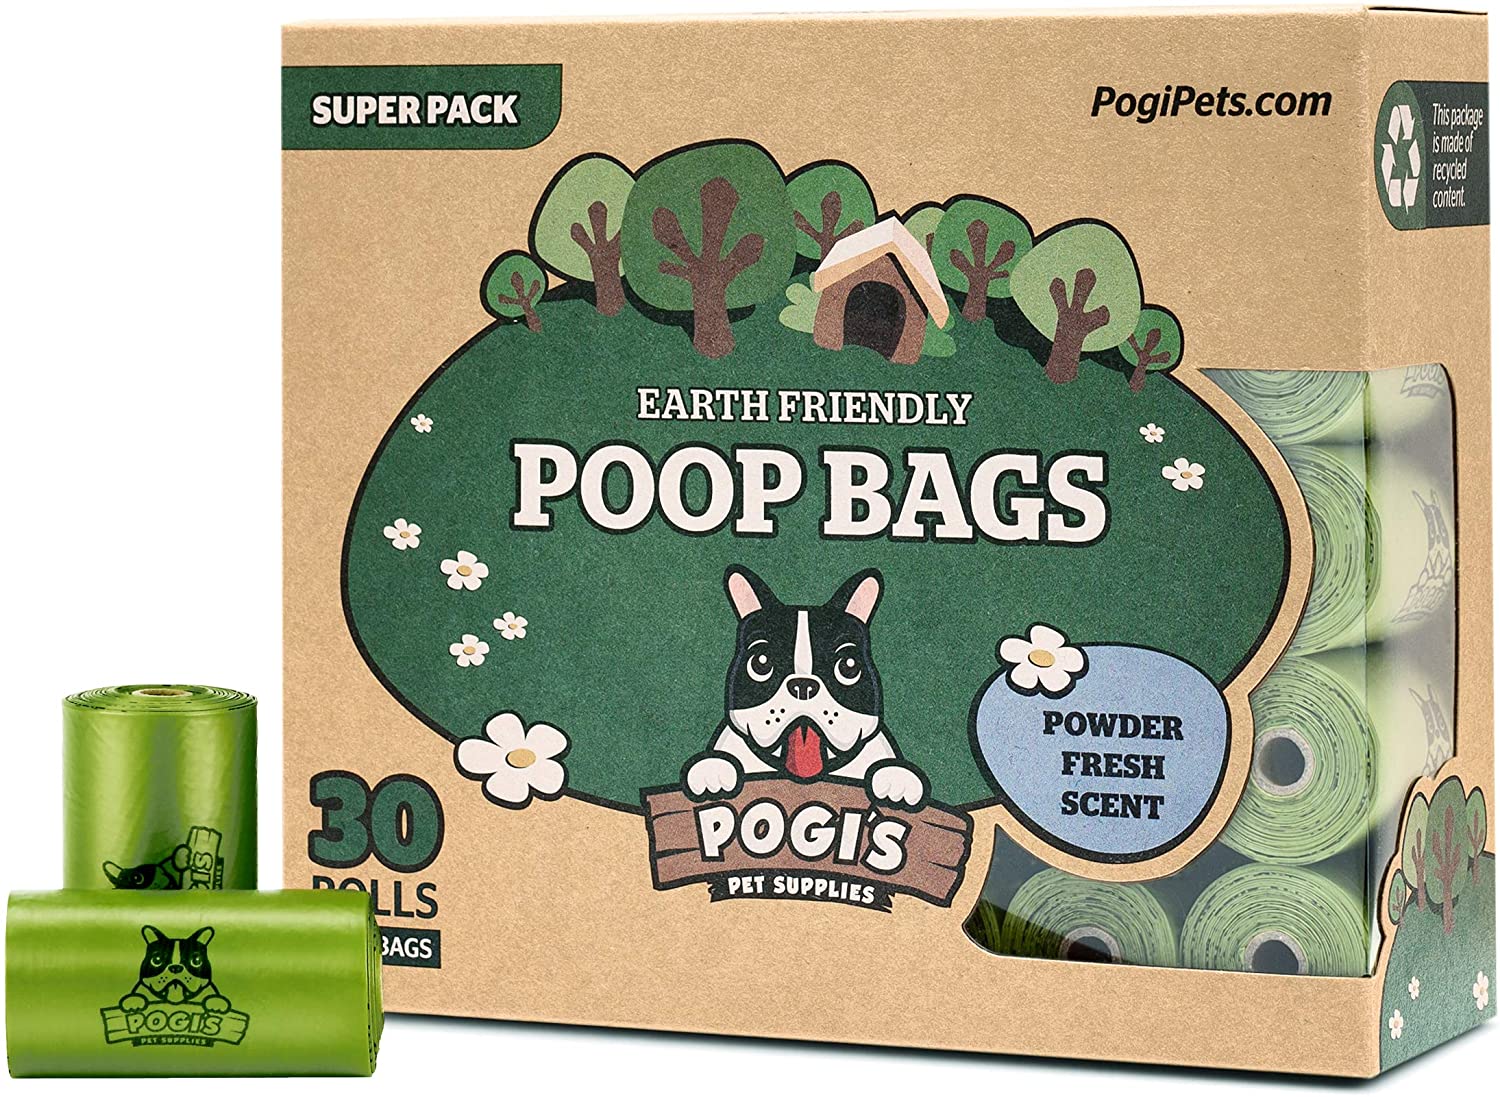  Pogi's Poop Bags - Bolsas para excremento de Perro - 30 Rollos (450 Bolsas) - Grandes, Biodegradables, Perfumadas, Herméticas 